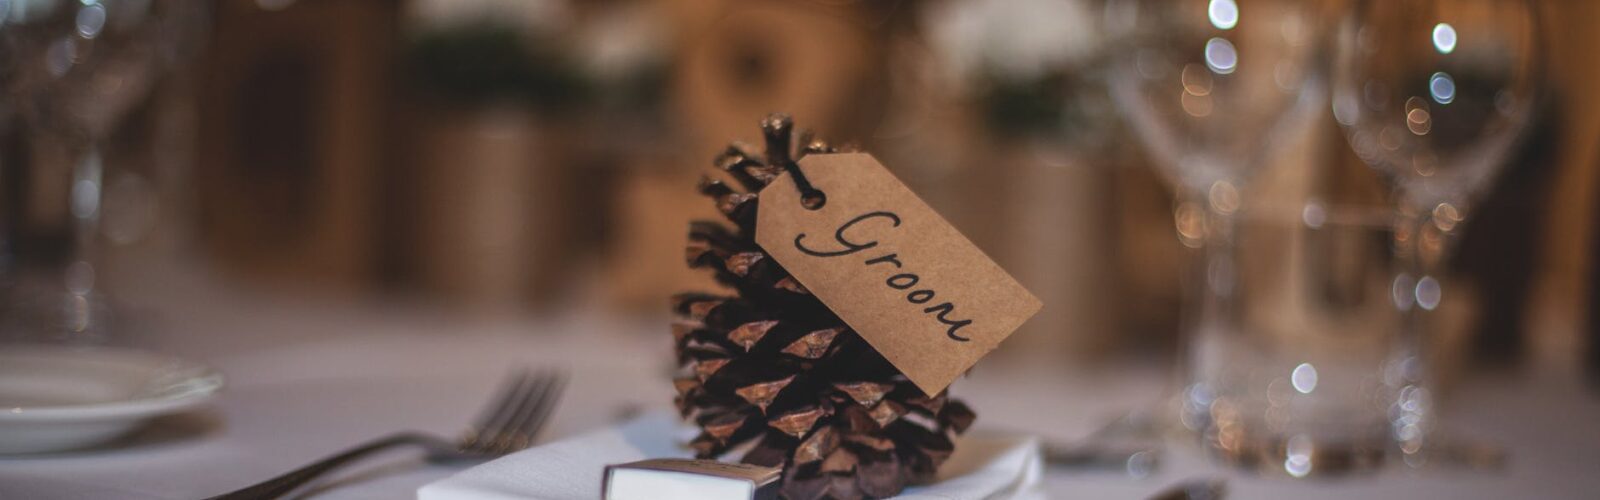 groom text on table